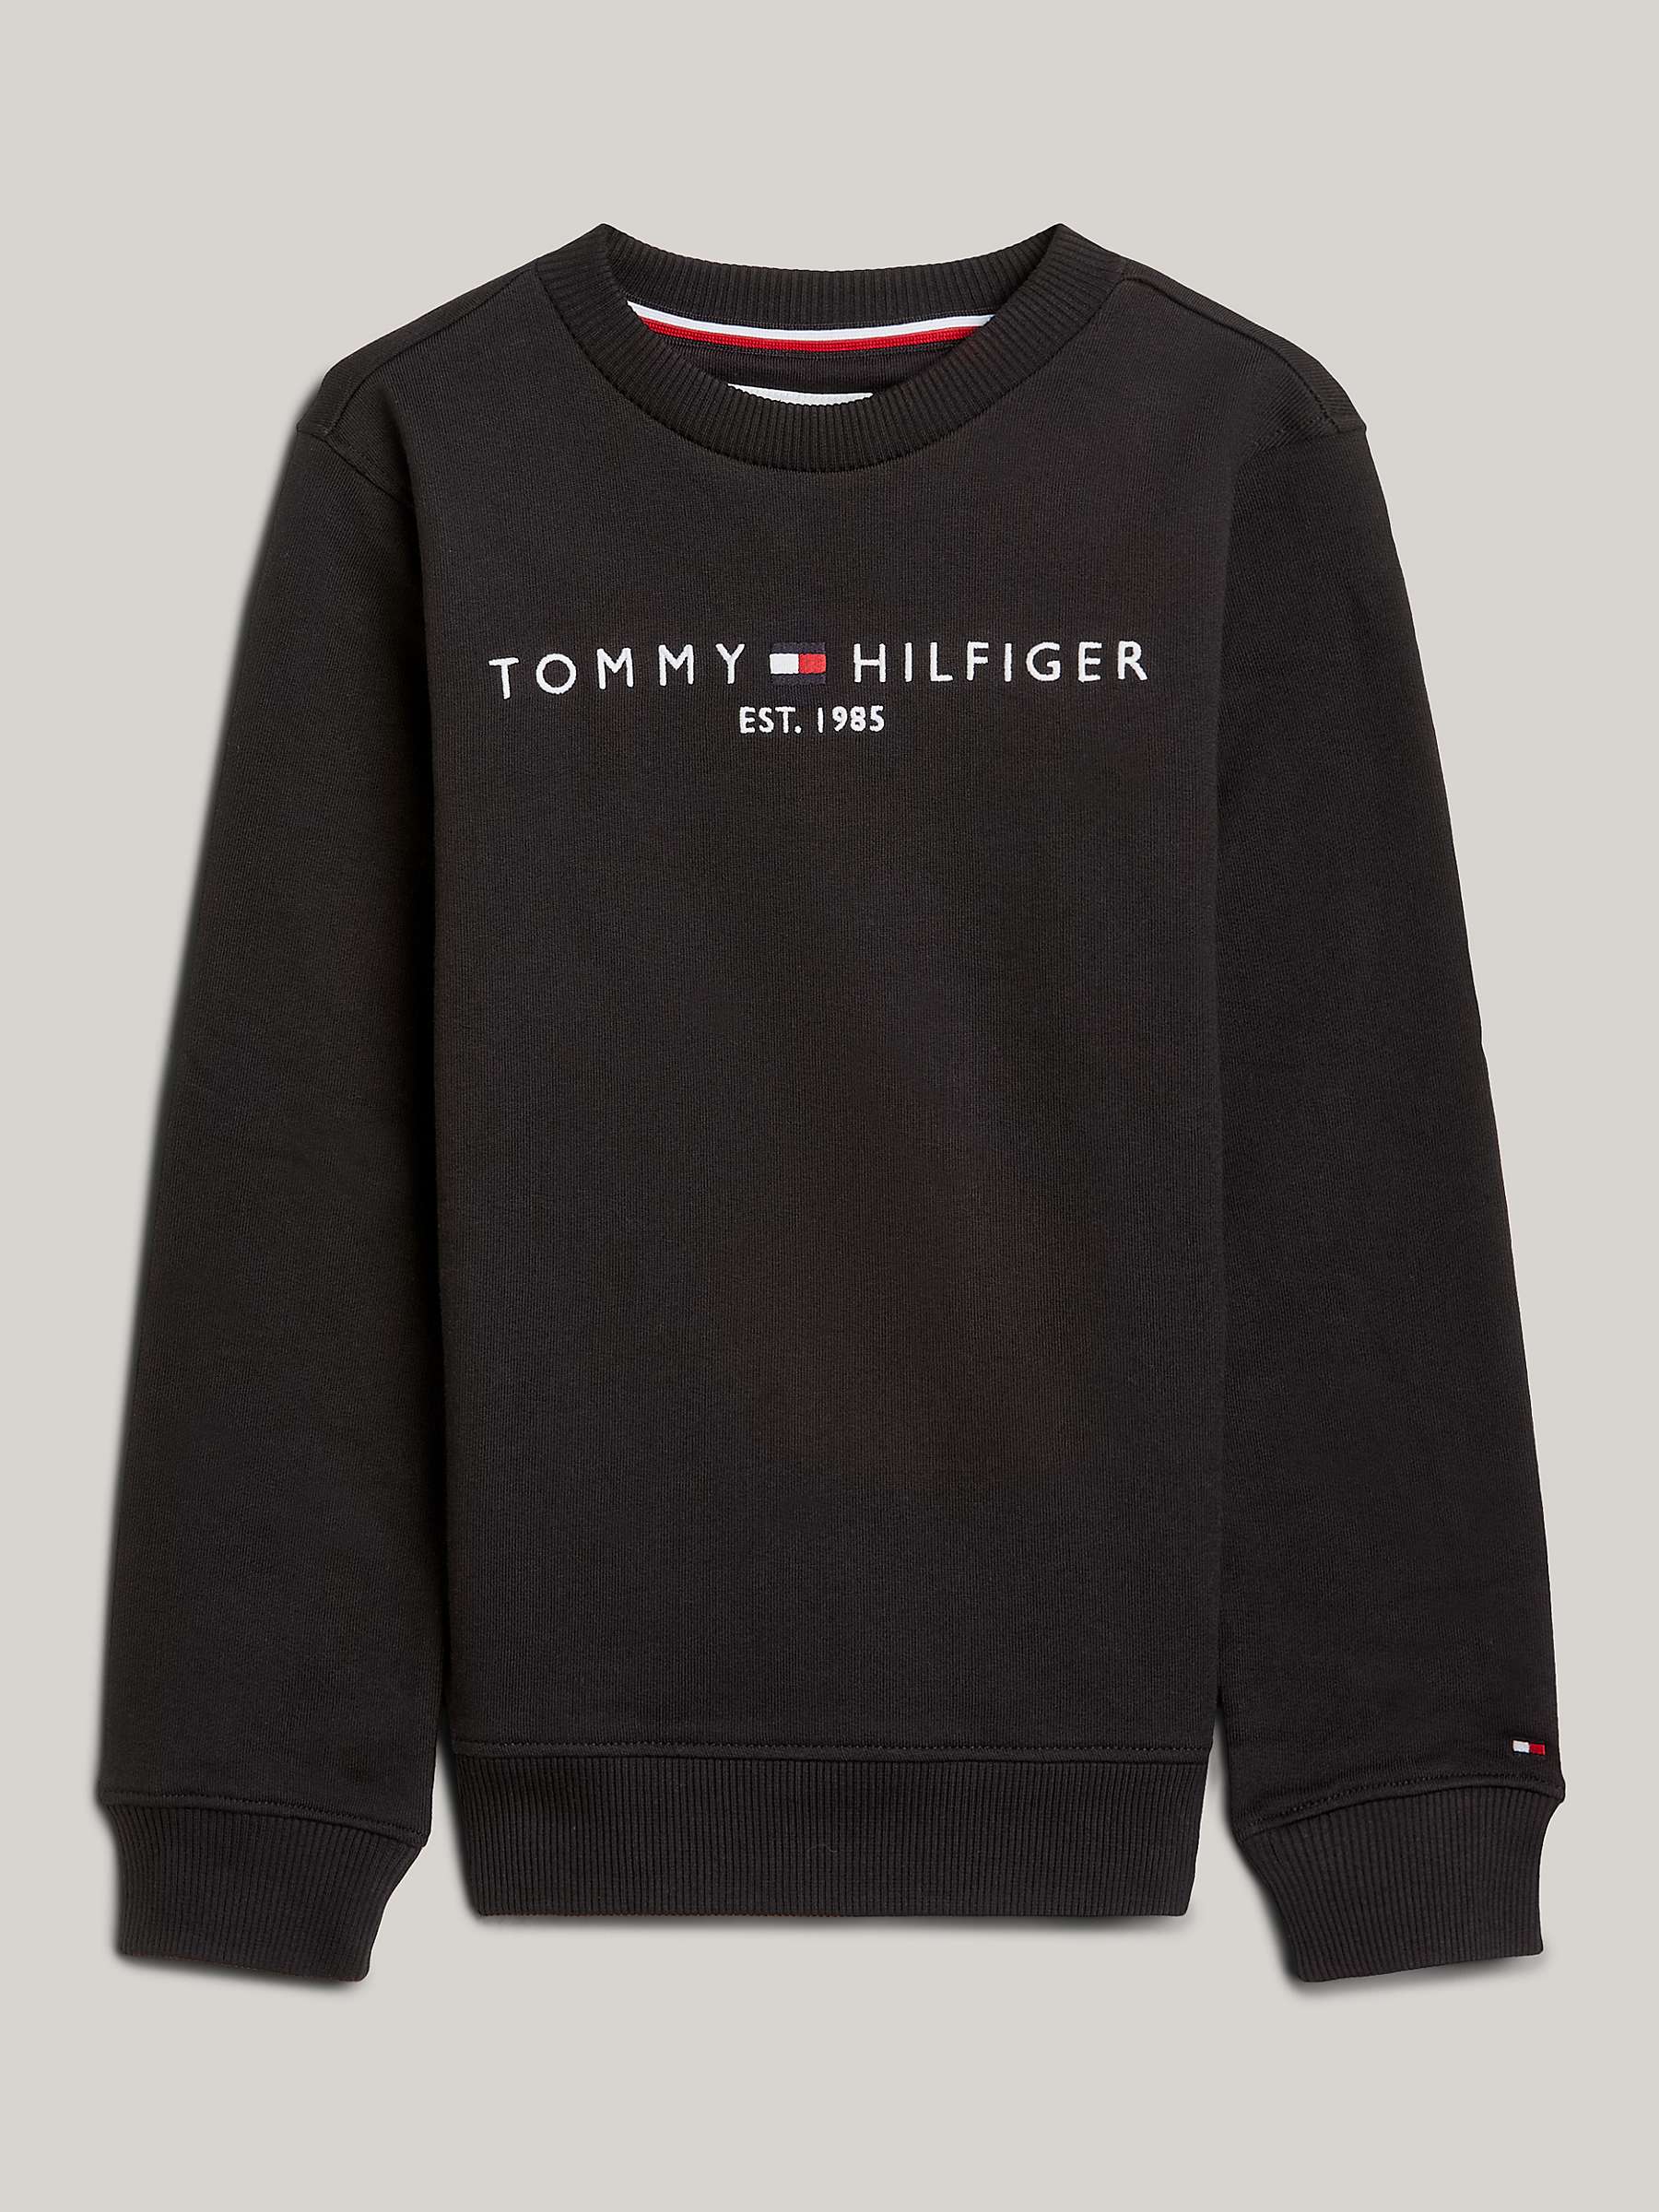 Buy Tommy Hilfiger Kids' Essential Organic Cotton Logo Sweatshirt Online at johnlewis.com